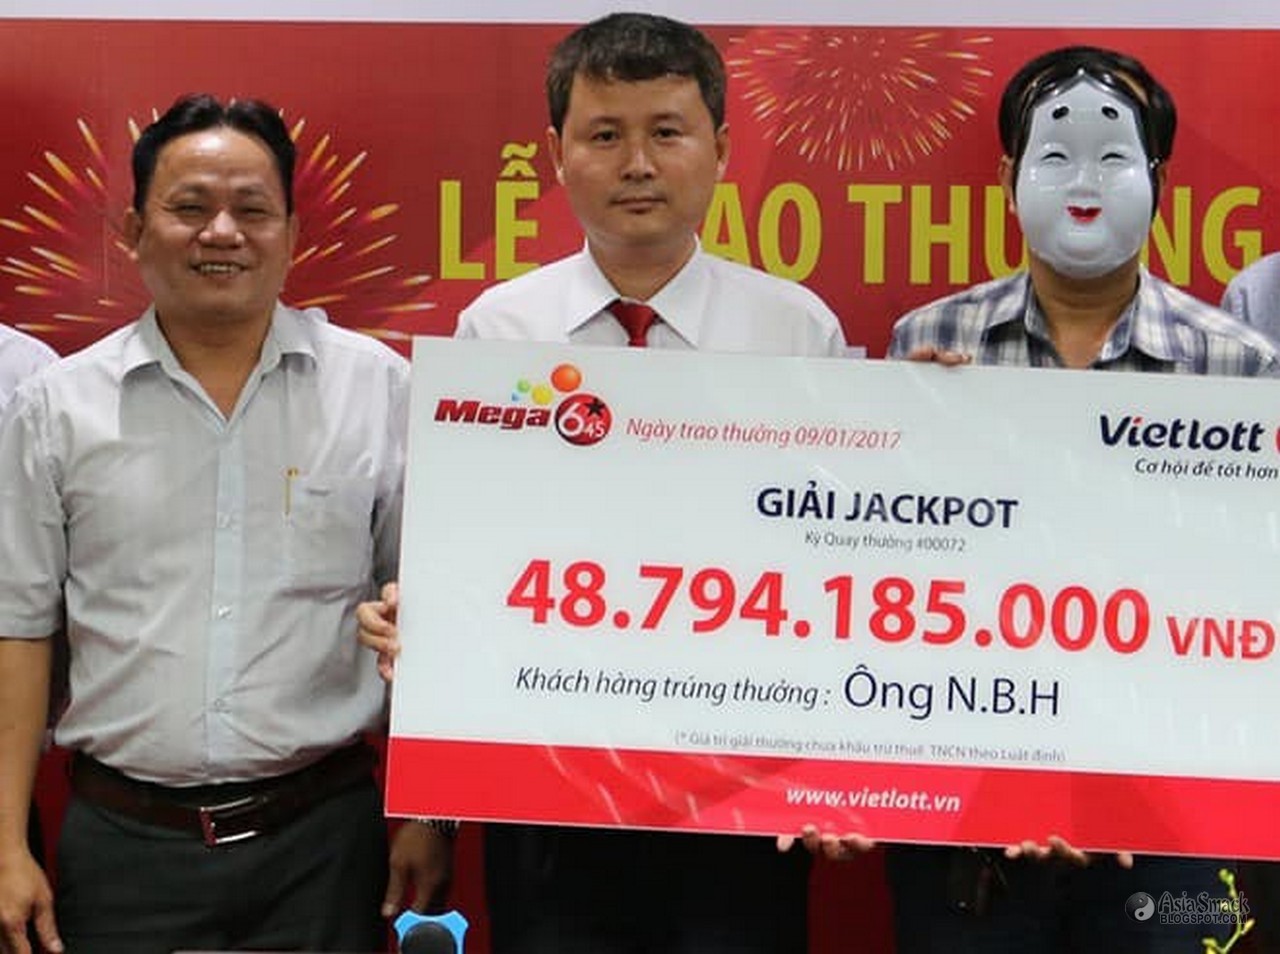 91club – The leading prestigious lottery house in Vietnam